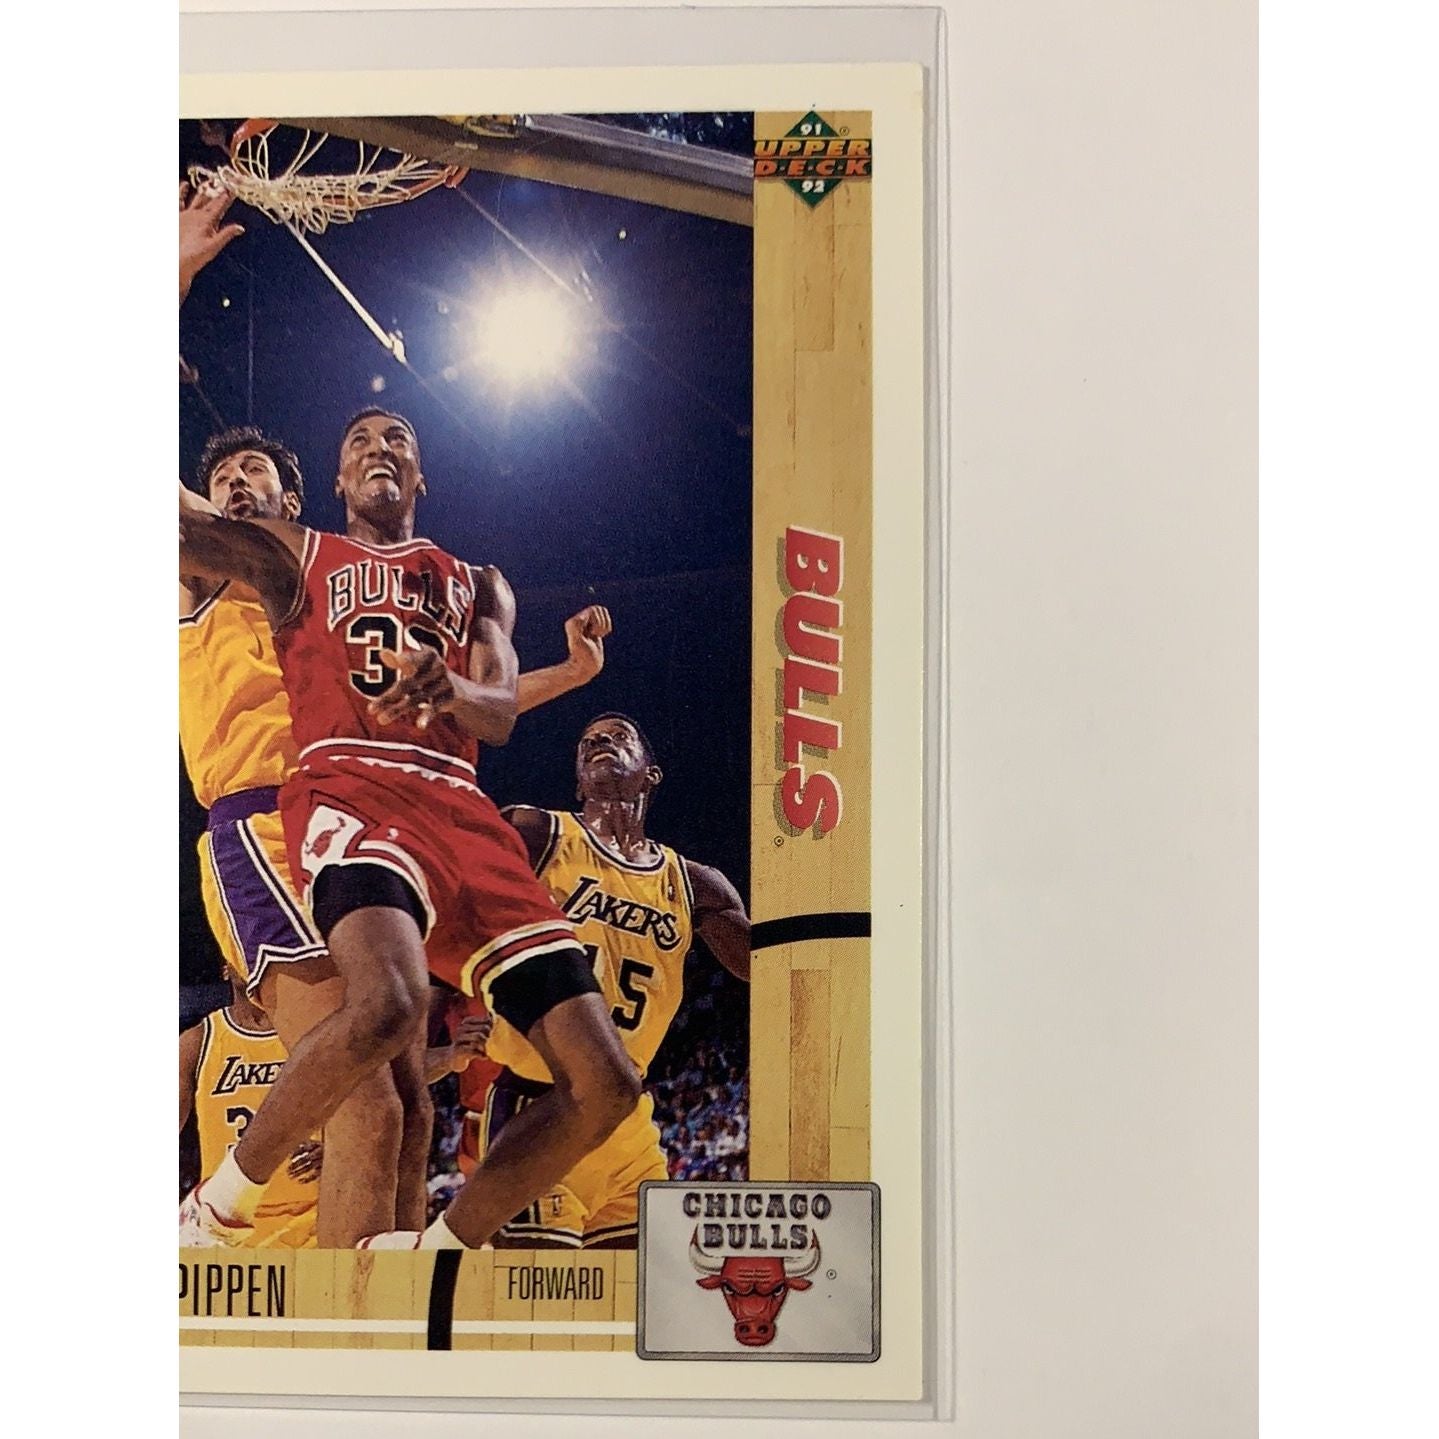  1991-92 Upper Deck Scottie Pippen Base #125  Local Legends Cards & Collectibles